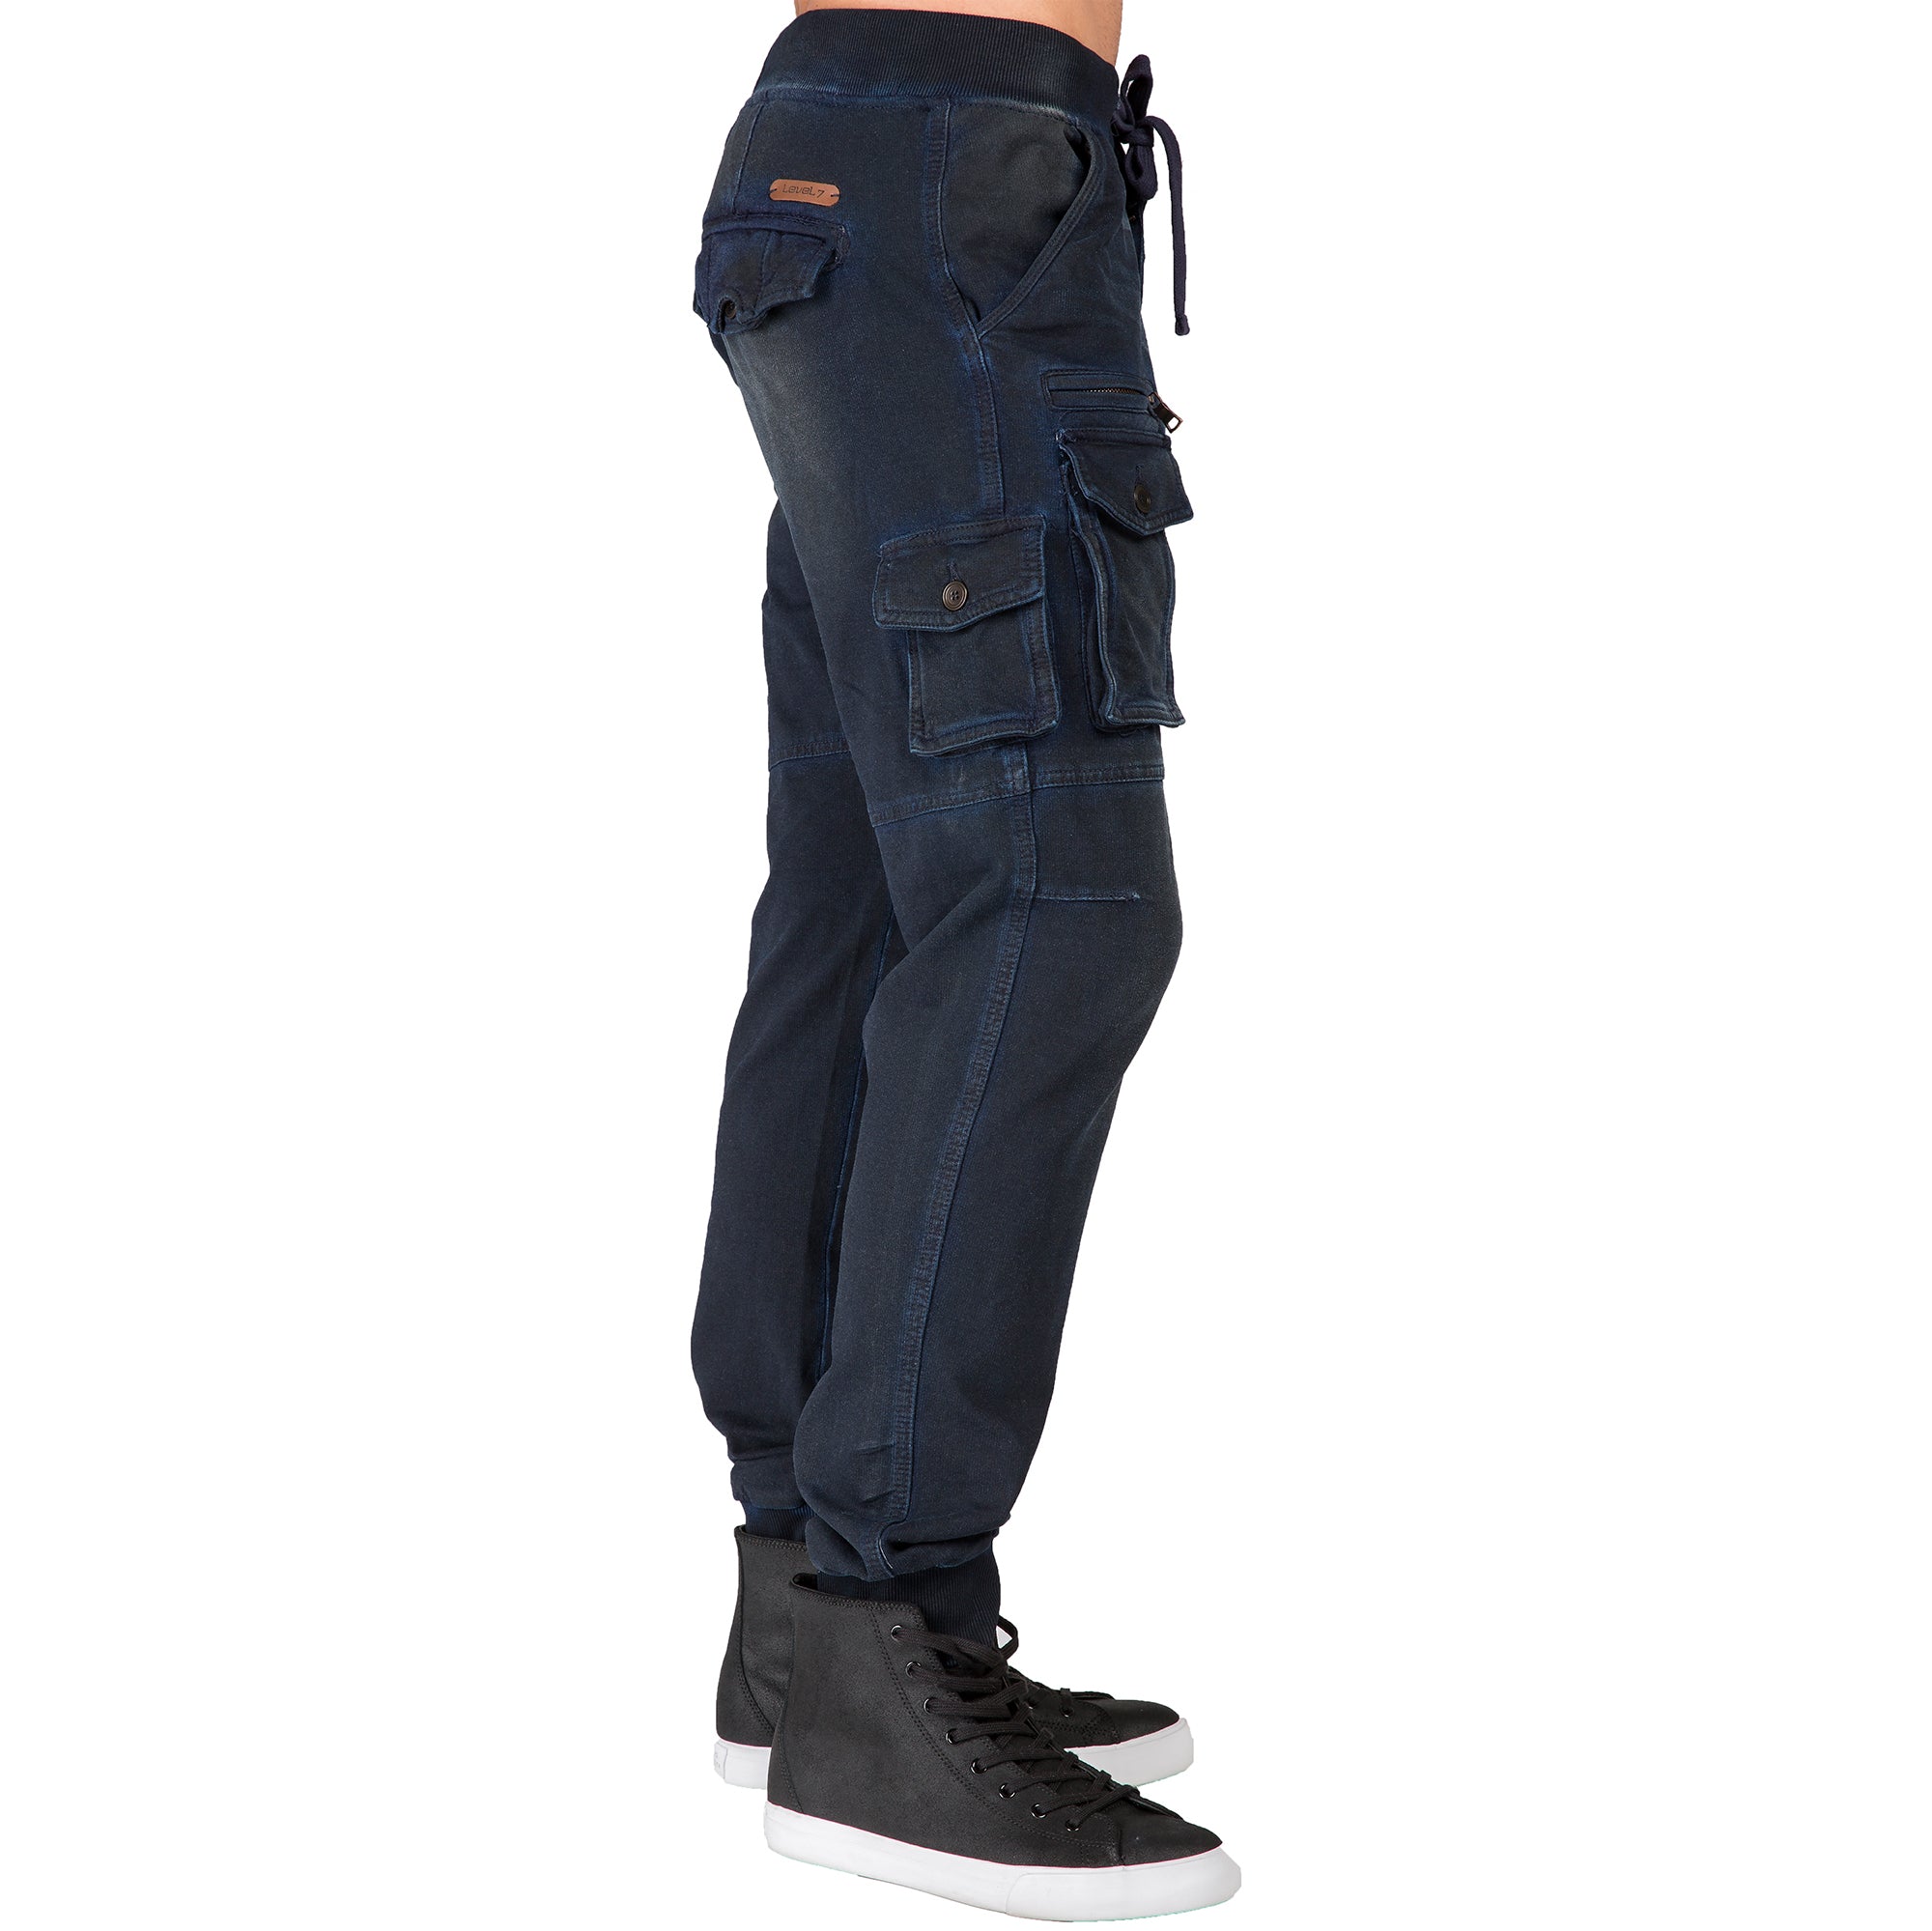 Midnight Vintage Premium Knit Denim Jogger Jeans Utility Cargo Zipper Pockets